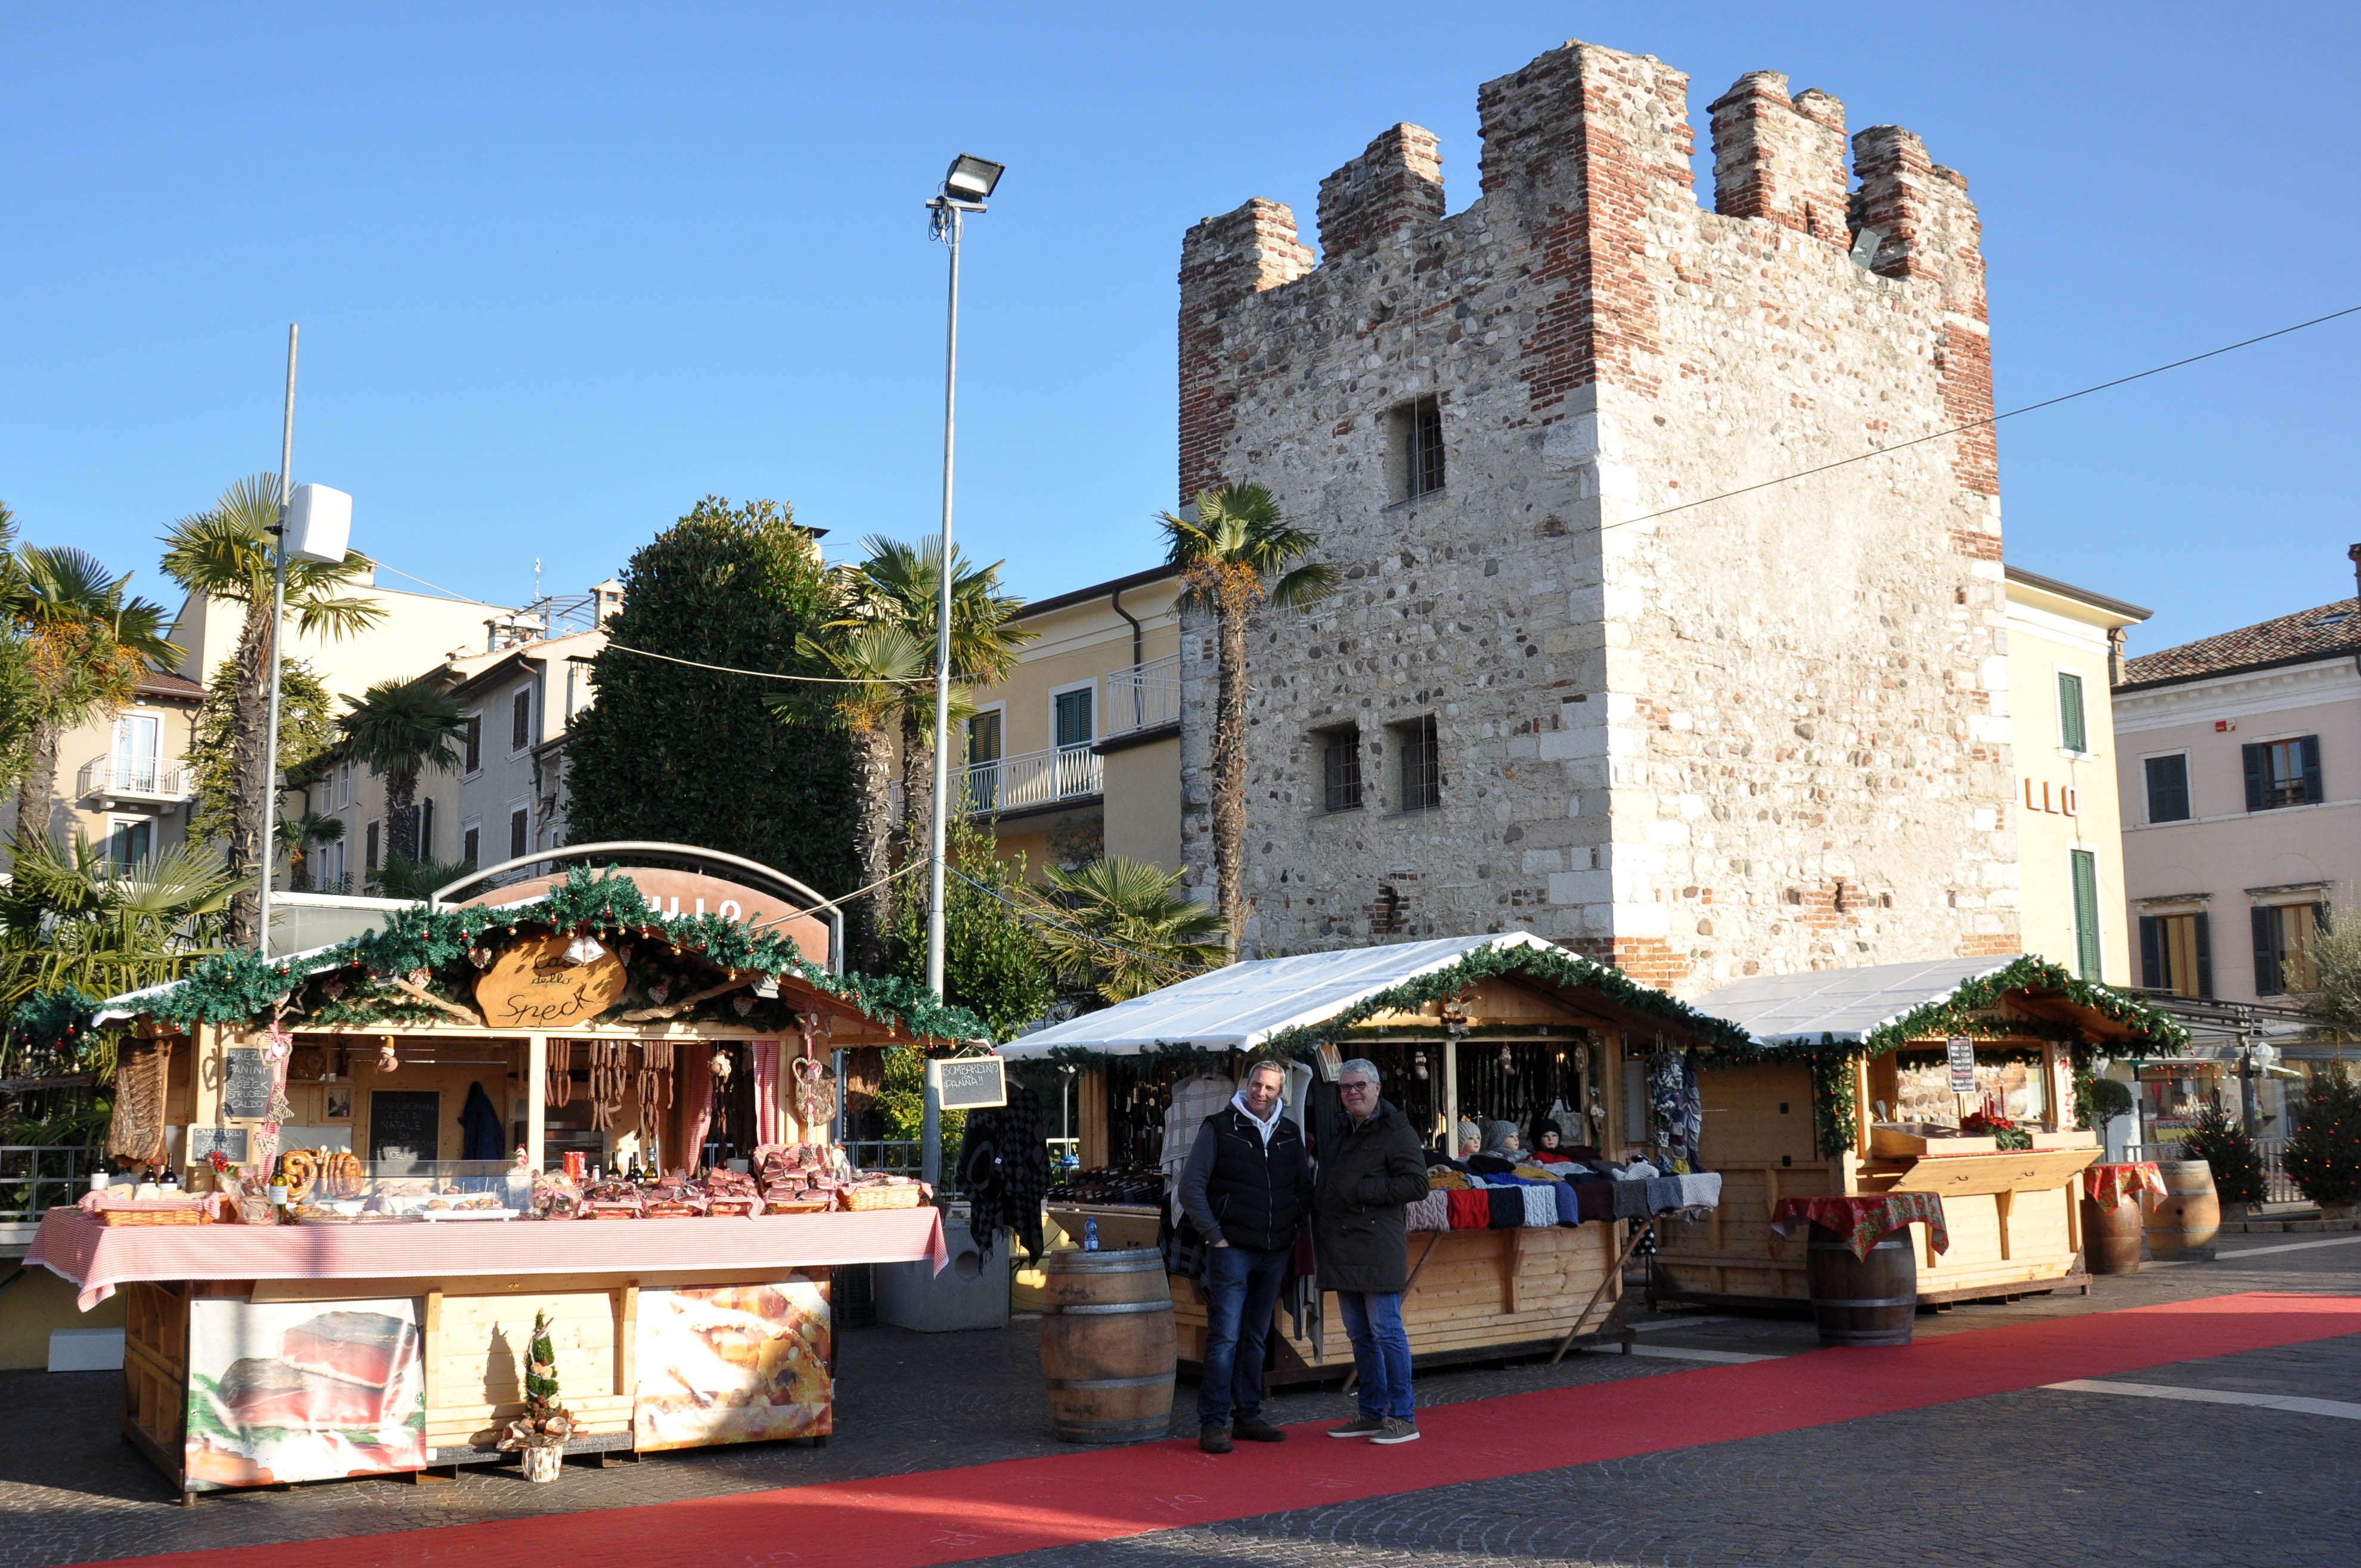 Christmas market, Bardolino, Lake Garda, Italy